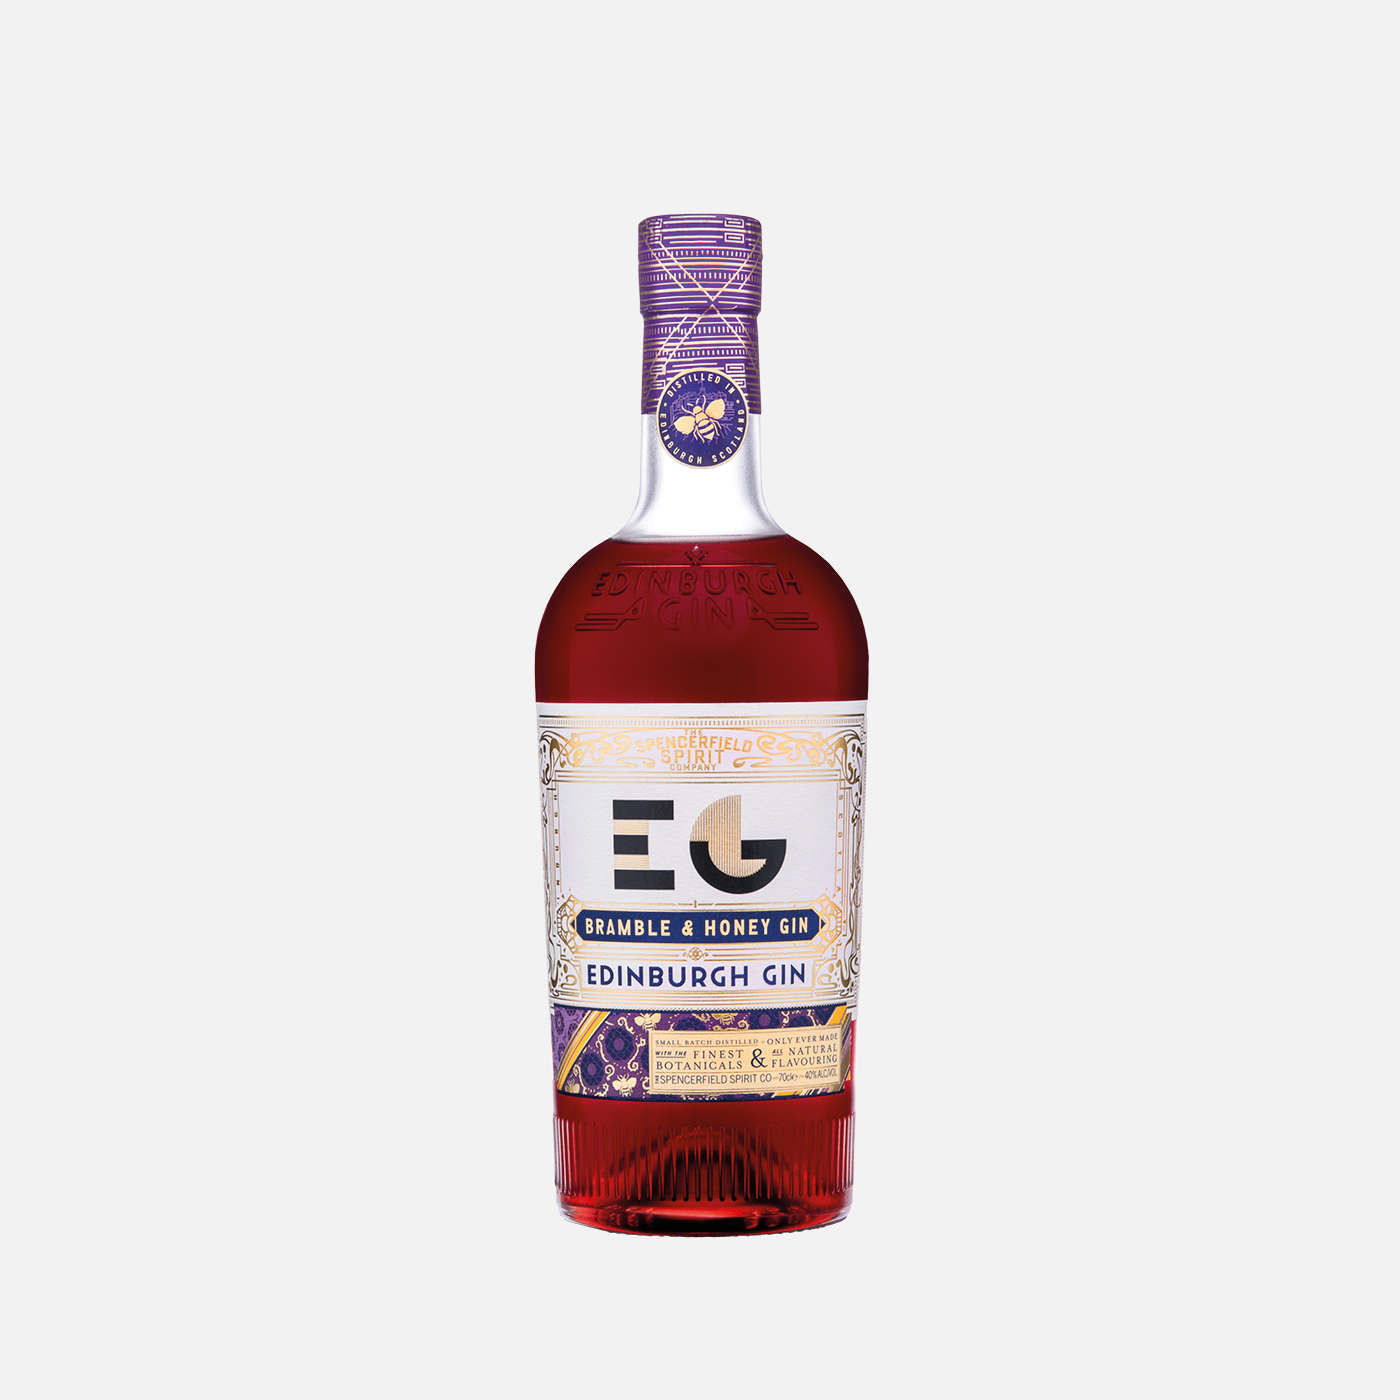 edinburgh gin (70cl, 40%)- all variants edinburgh gin bramble & honey